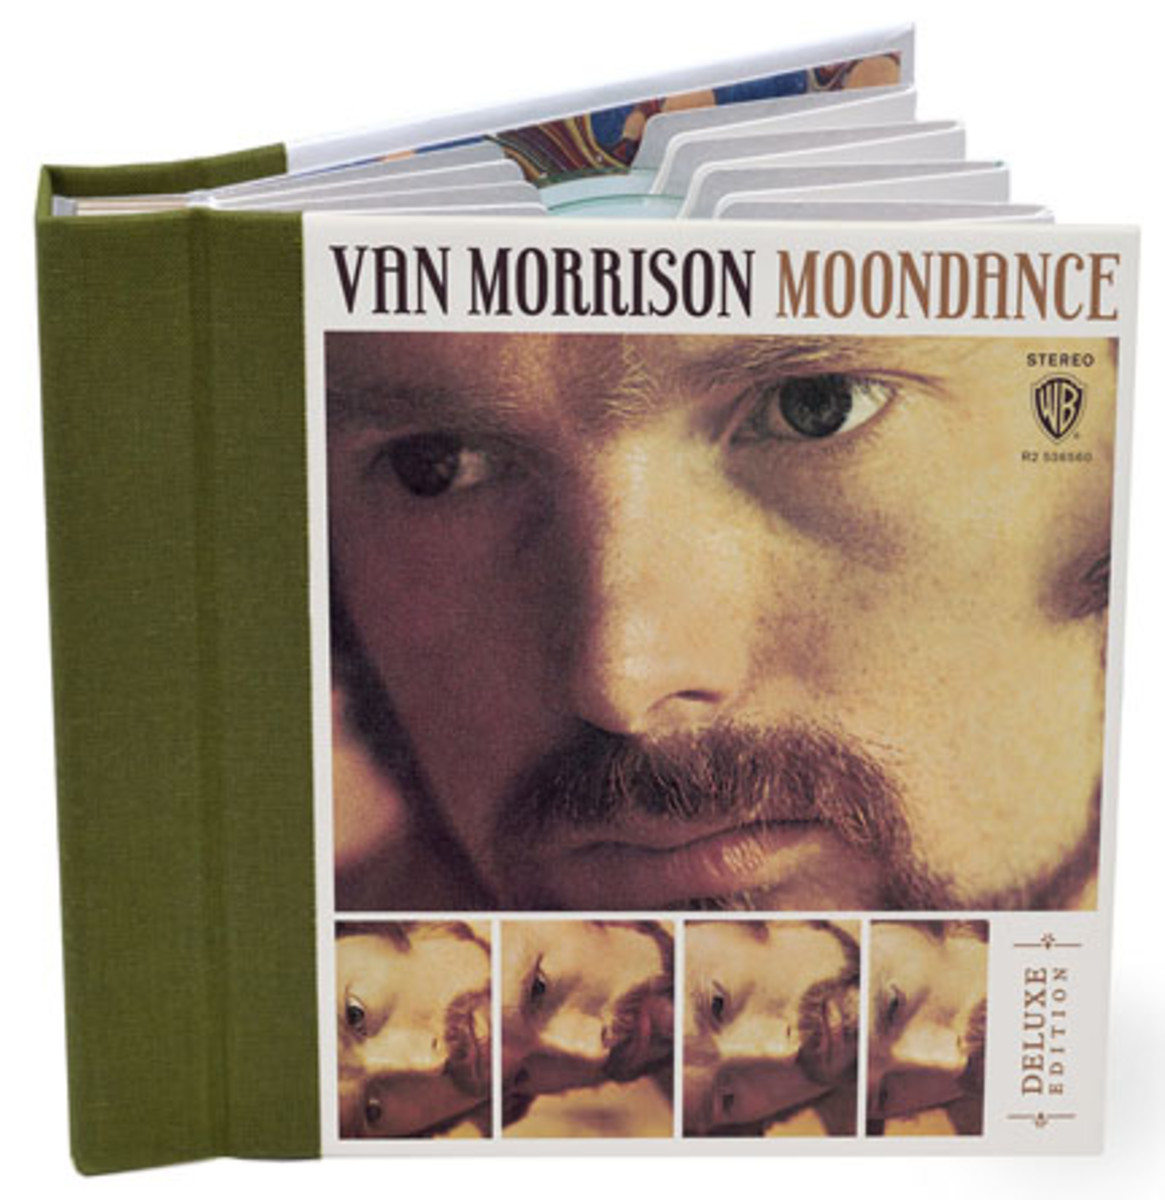 Van Morrison Moondance reissue